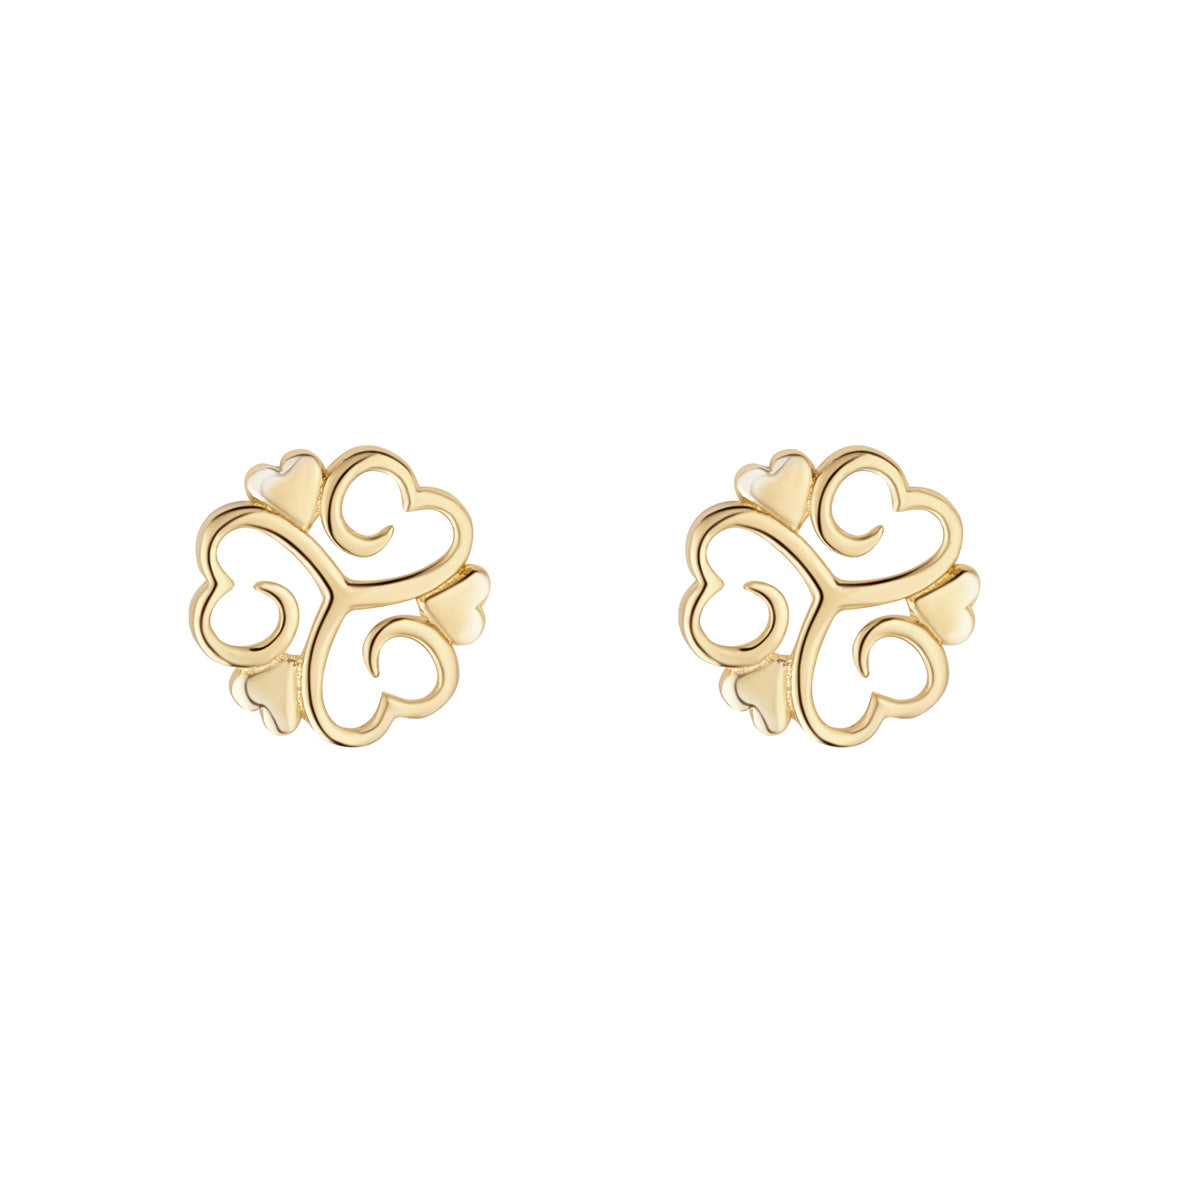 Stock image of Solvar fancy shamrock stud earrings s34204